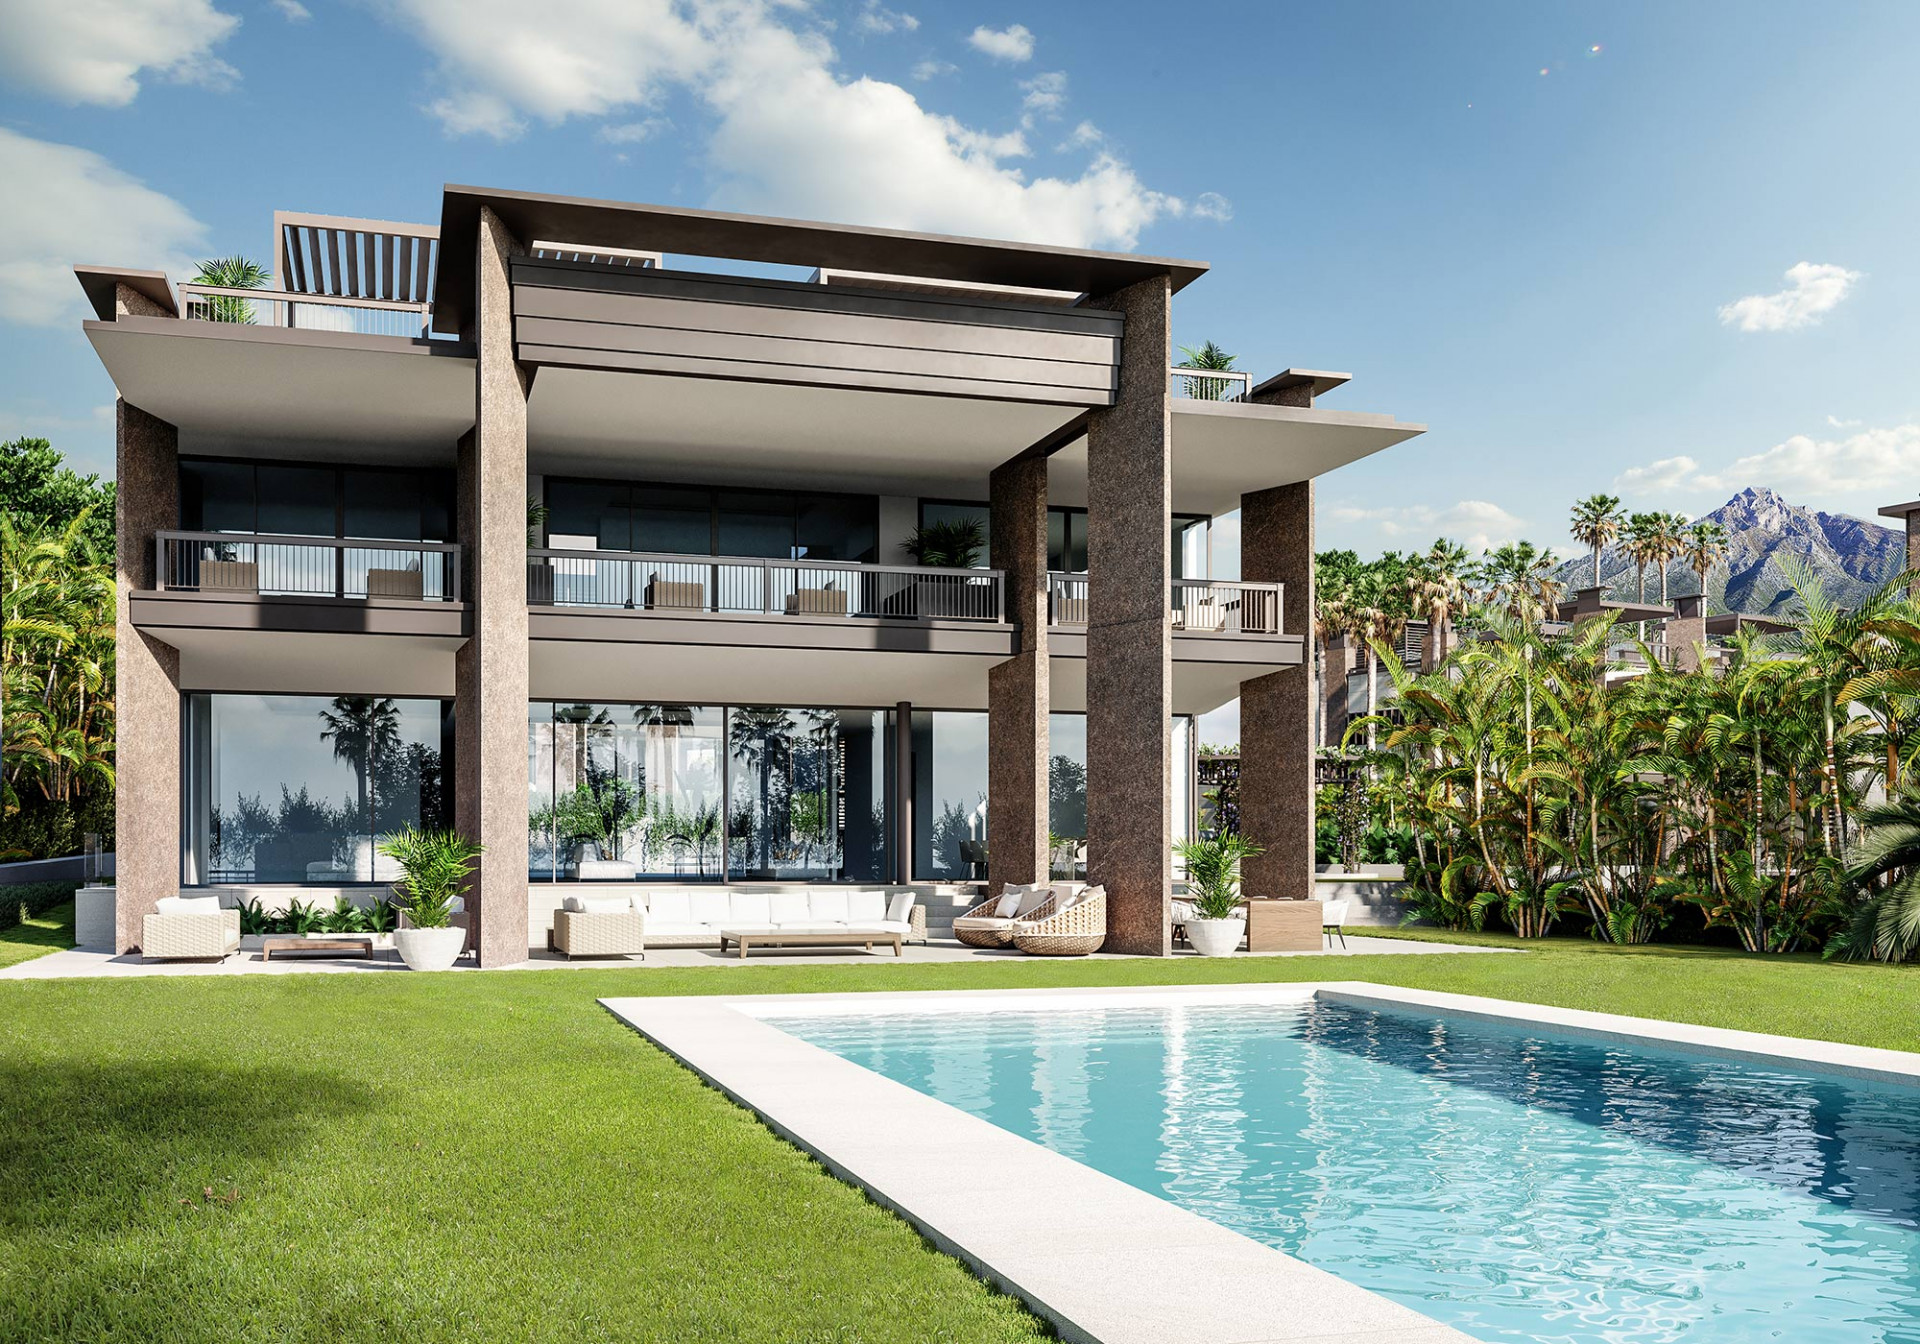 Exclusive six bedroom villa with solarium with panoramic views over Puerto Banús in Marbella.